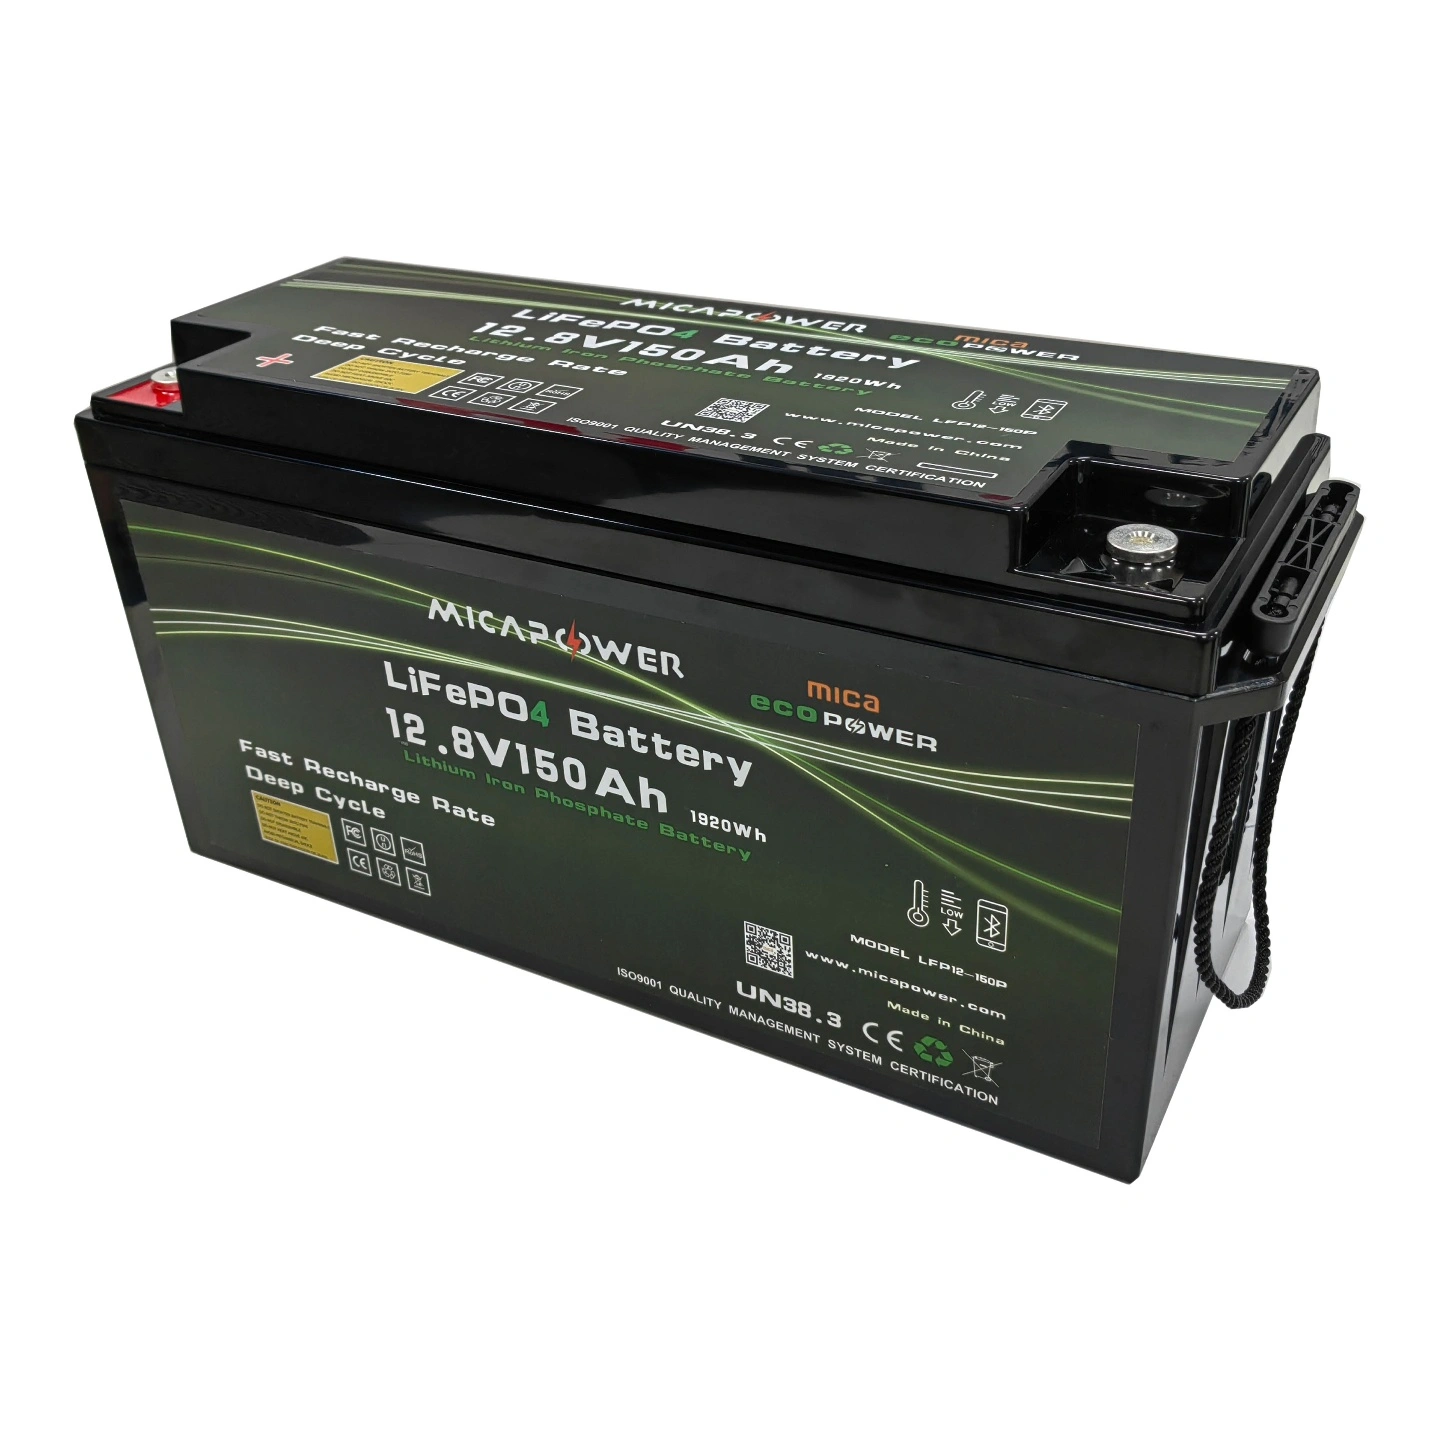 MICA Litiumbatteri PRO 200AH m/Bluetooth og varme 12,8v BMS